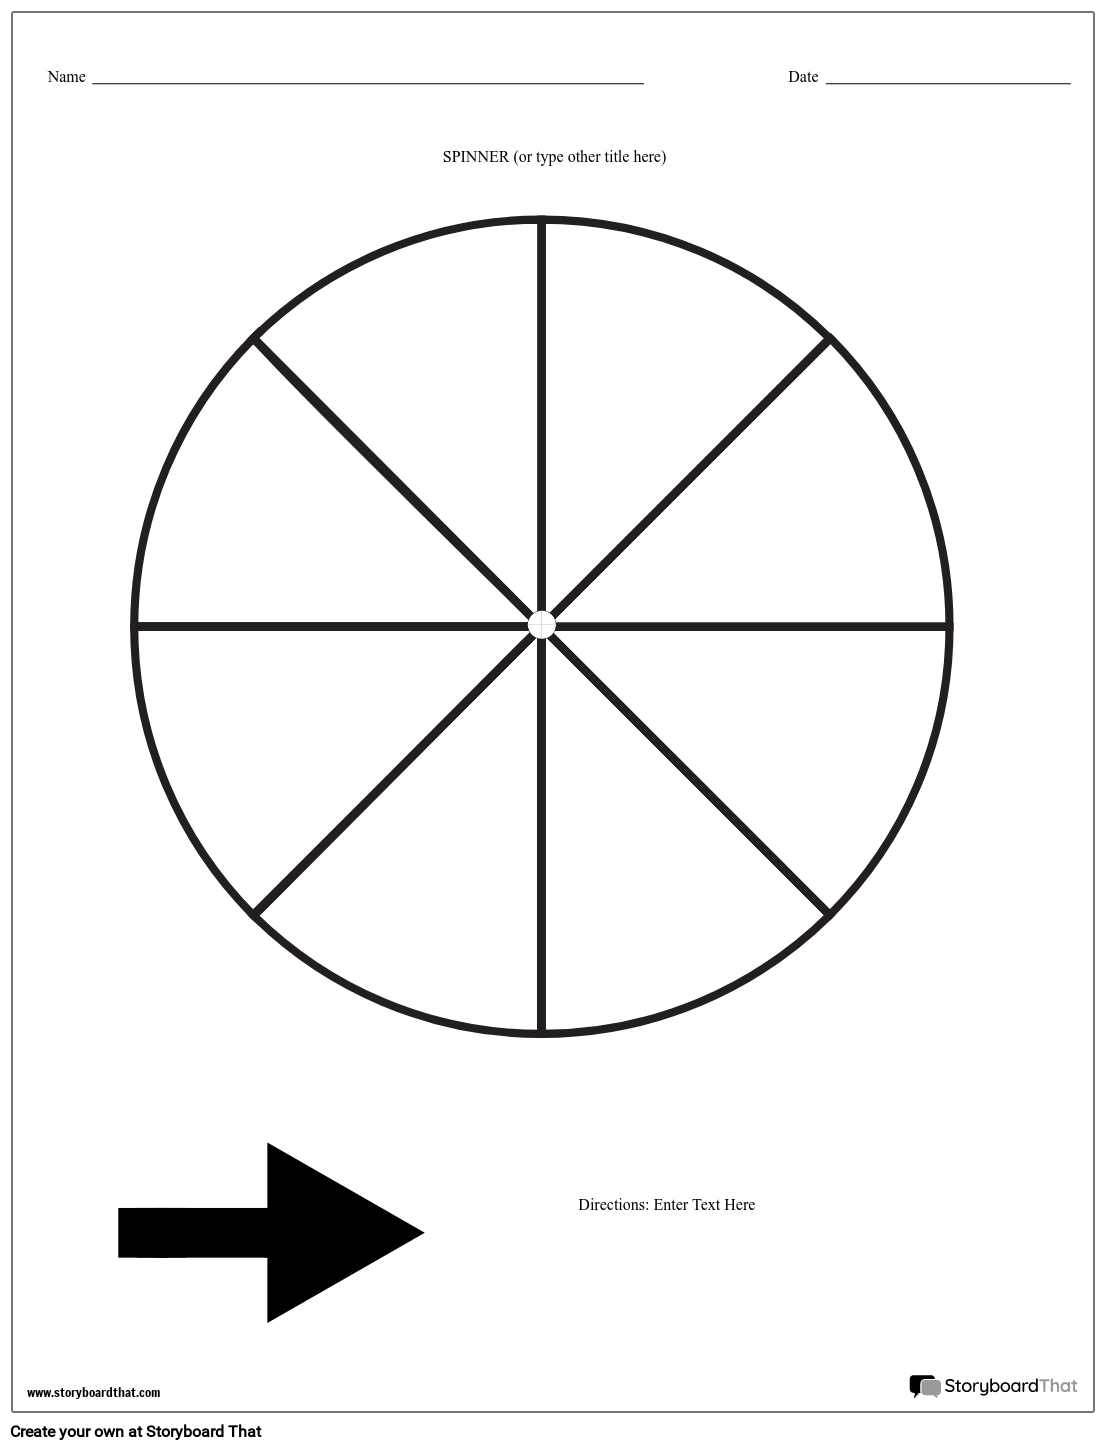 Simple Spin the Wheel Game Worksheet Design